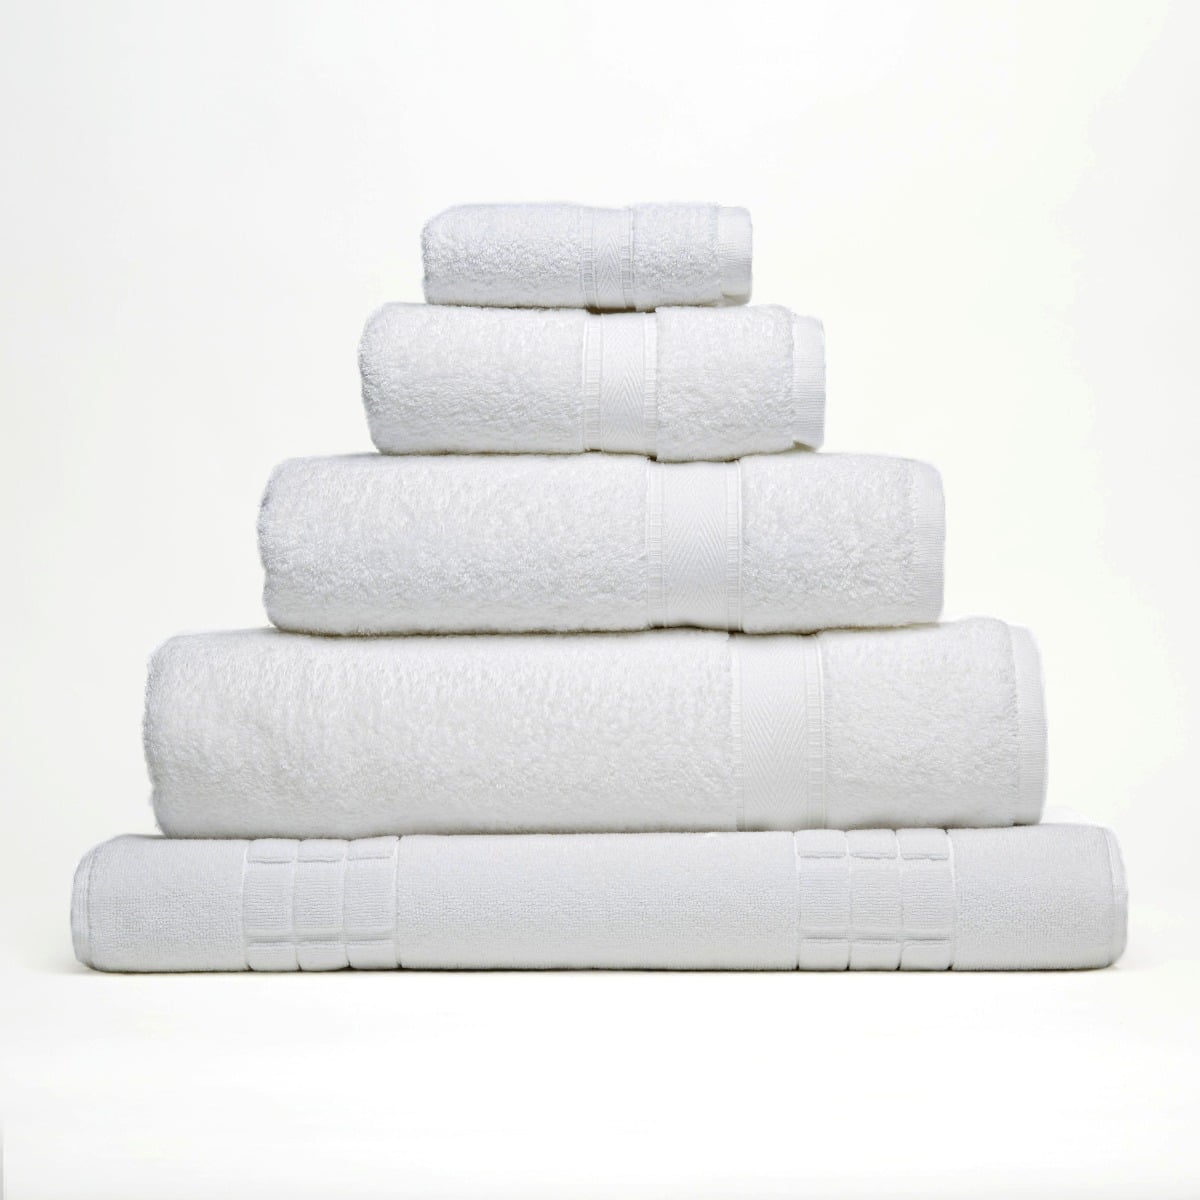 Pegasus Textiles Oasis Luxury Hotel & Spa Quality White Towels - 600gsm